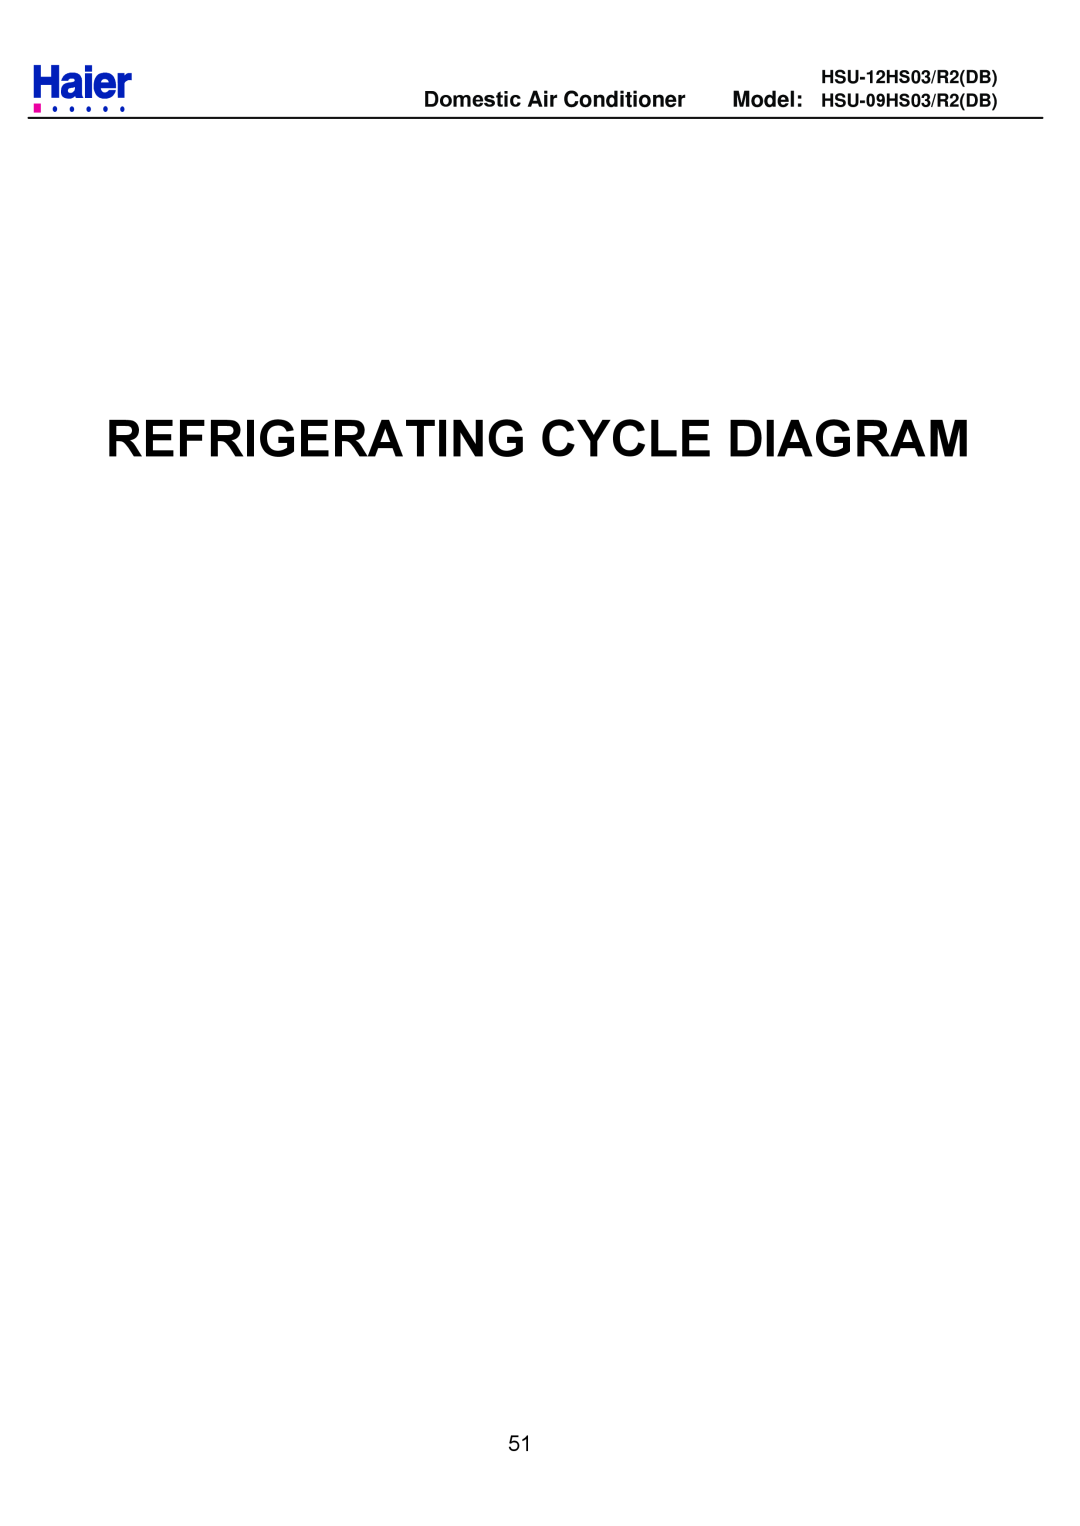 Haier HSU-12HS03/R2DB service manual Refrigerating Cycle Diagram, Domestic Air Conditioner, Model HSU-09HS03/R2DB 